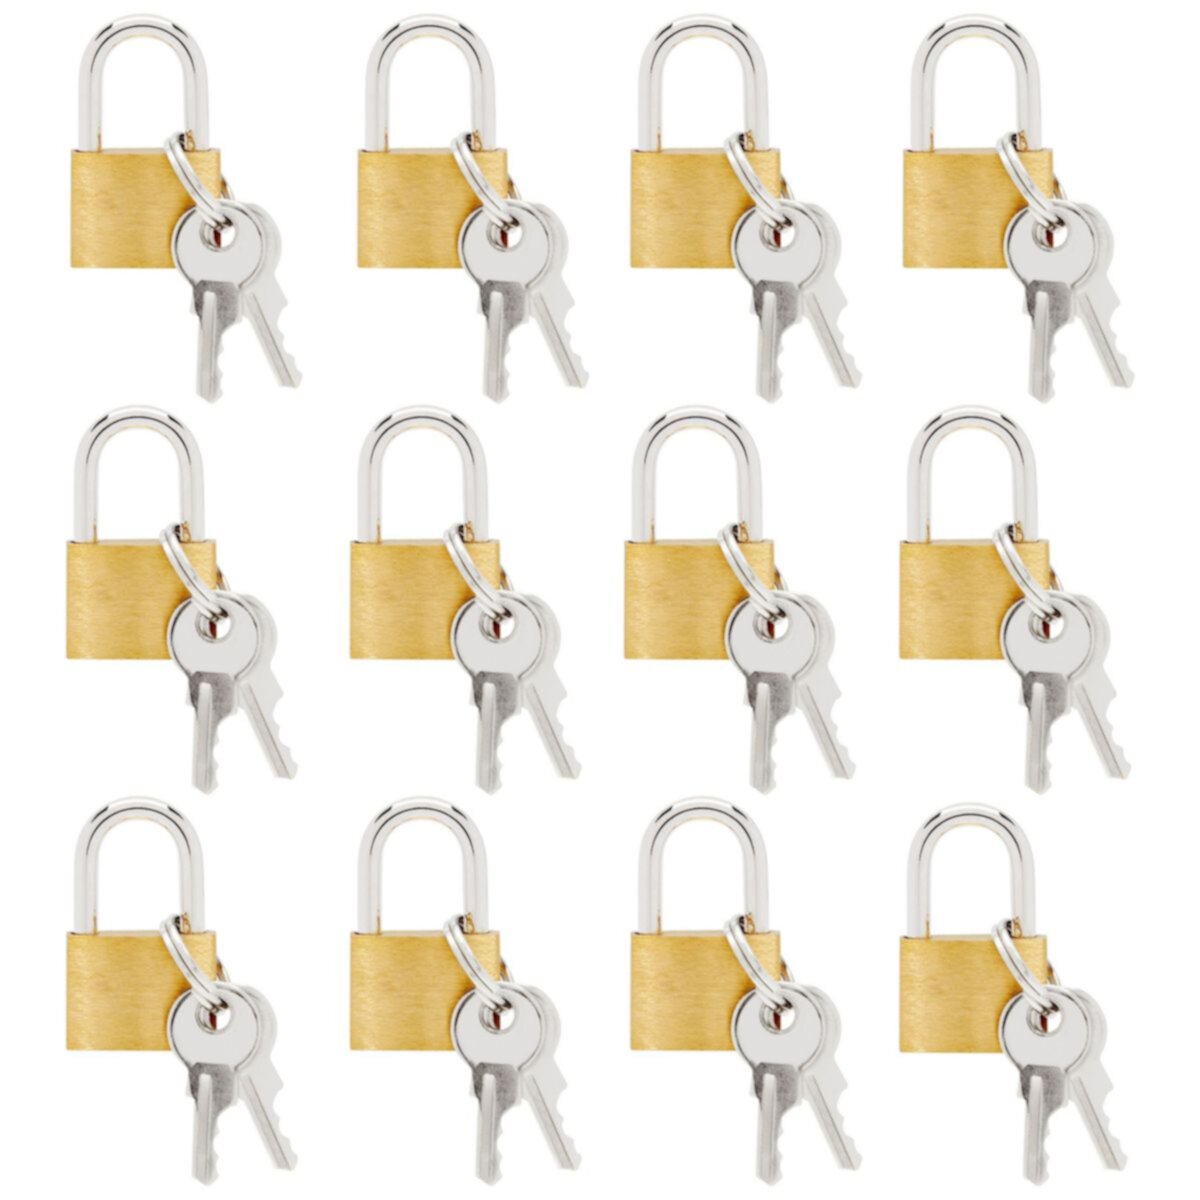 12 Pack 1.2-inch Small Luggage Locks With Keys - Mini Padlocks For Locker Juvale